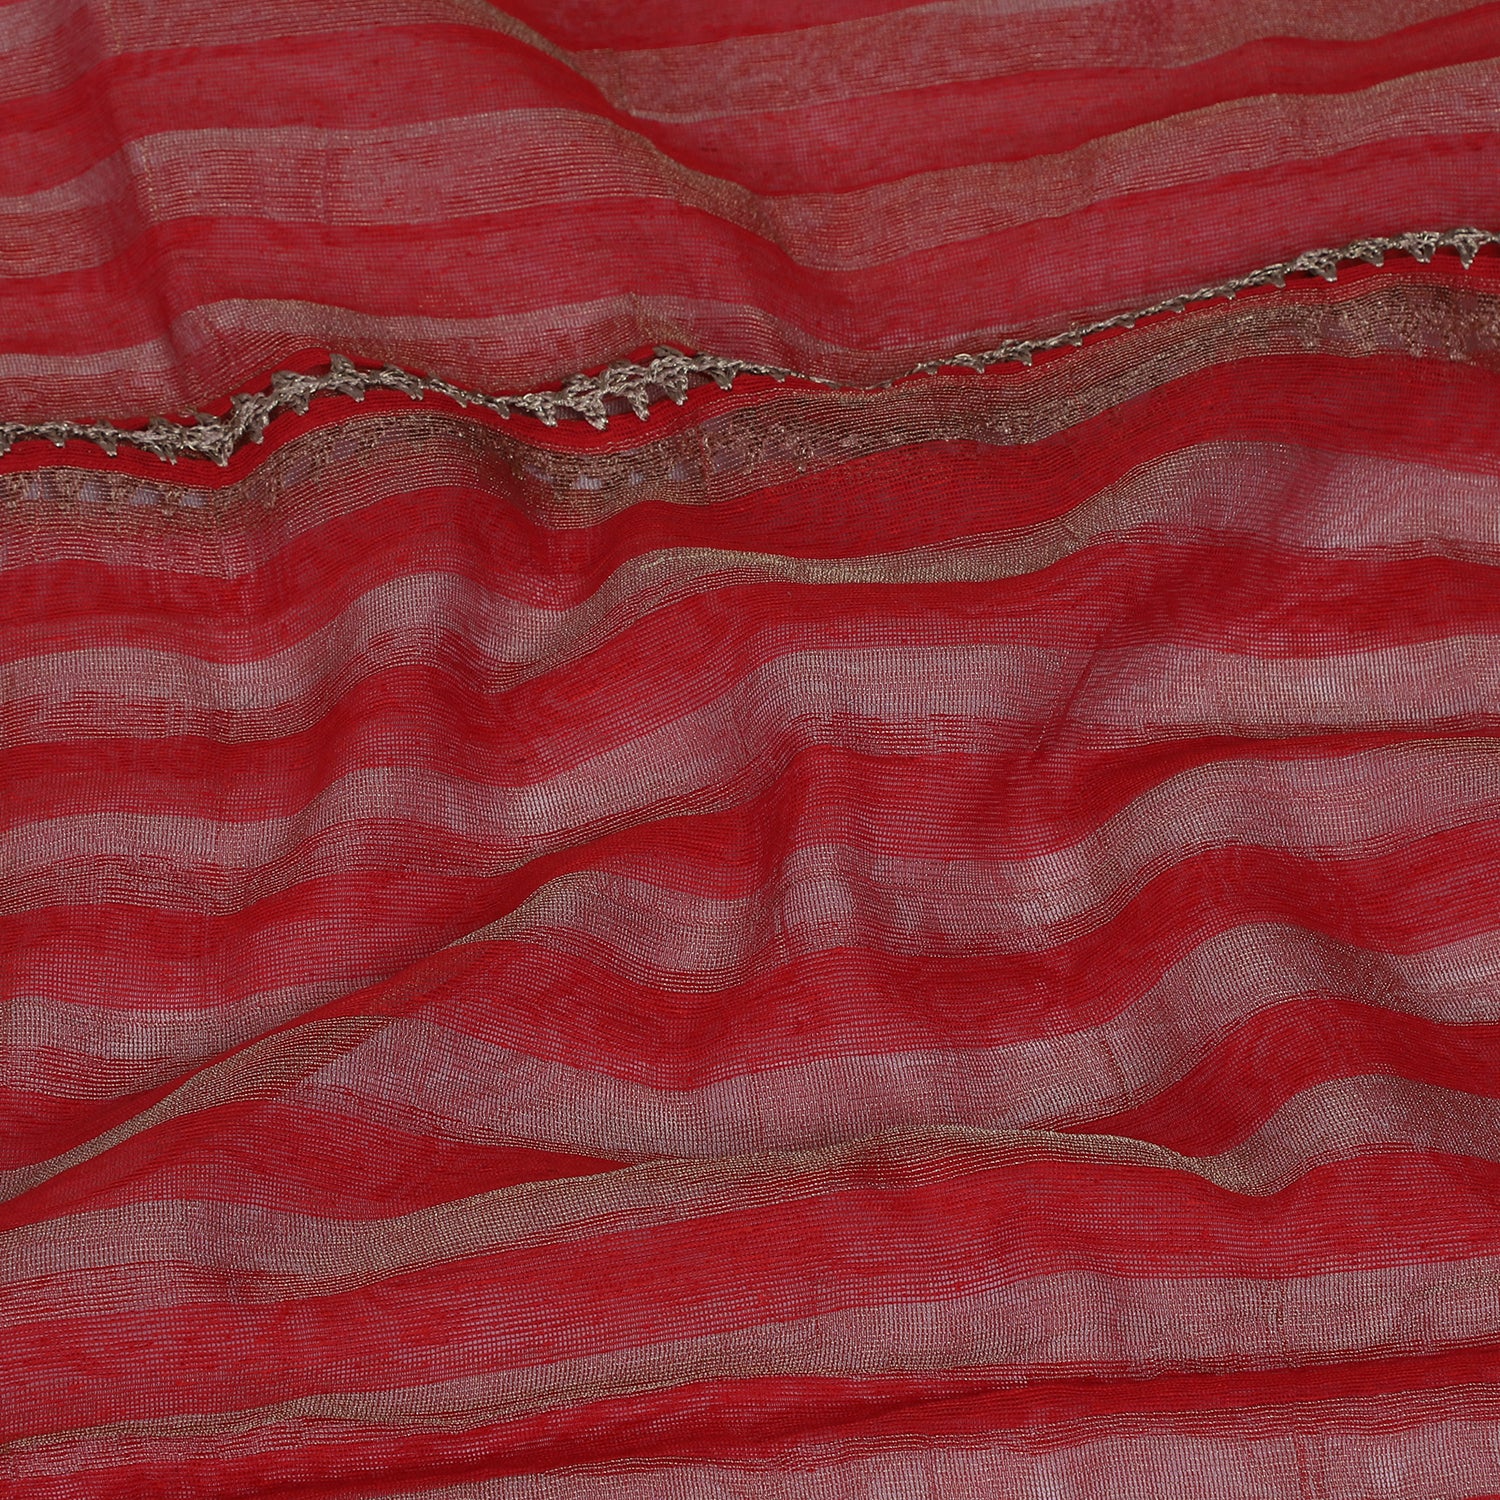 Red-Golden Color Nylon Net Stole with Crochet Border